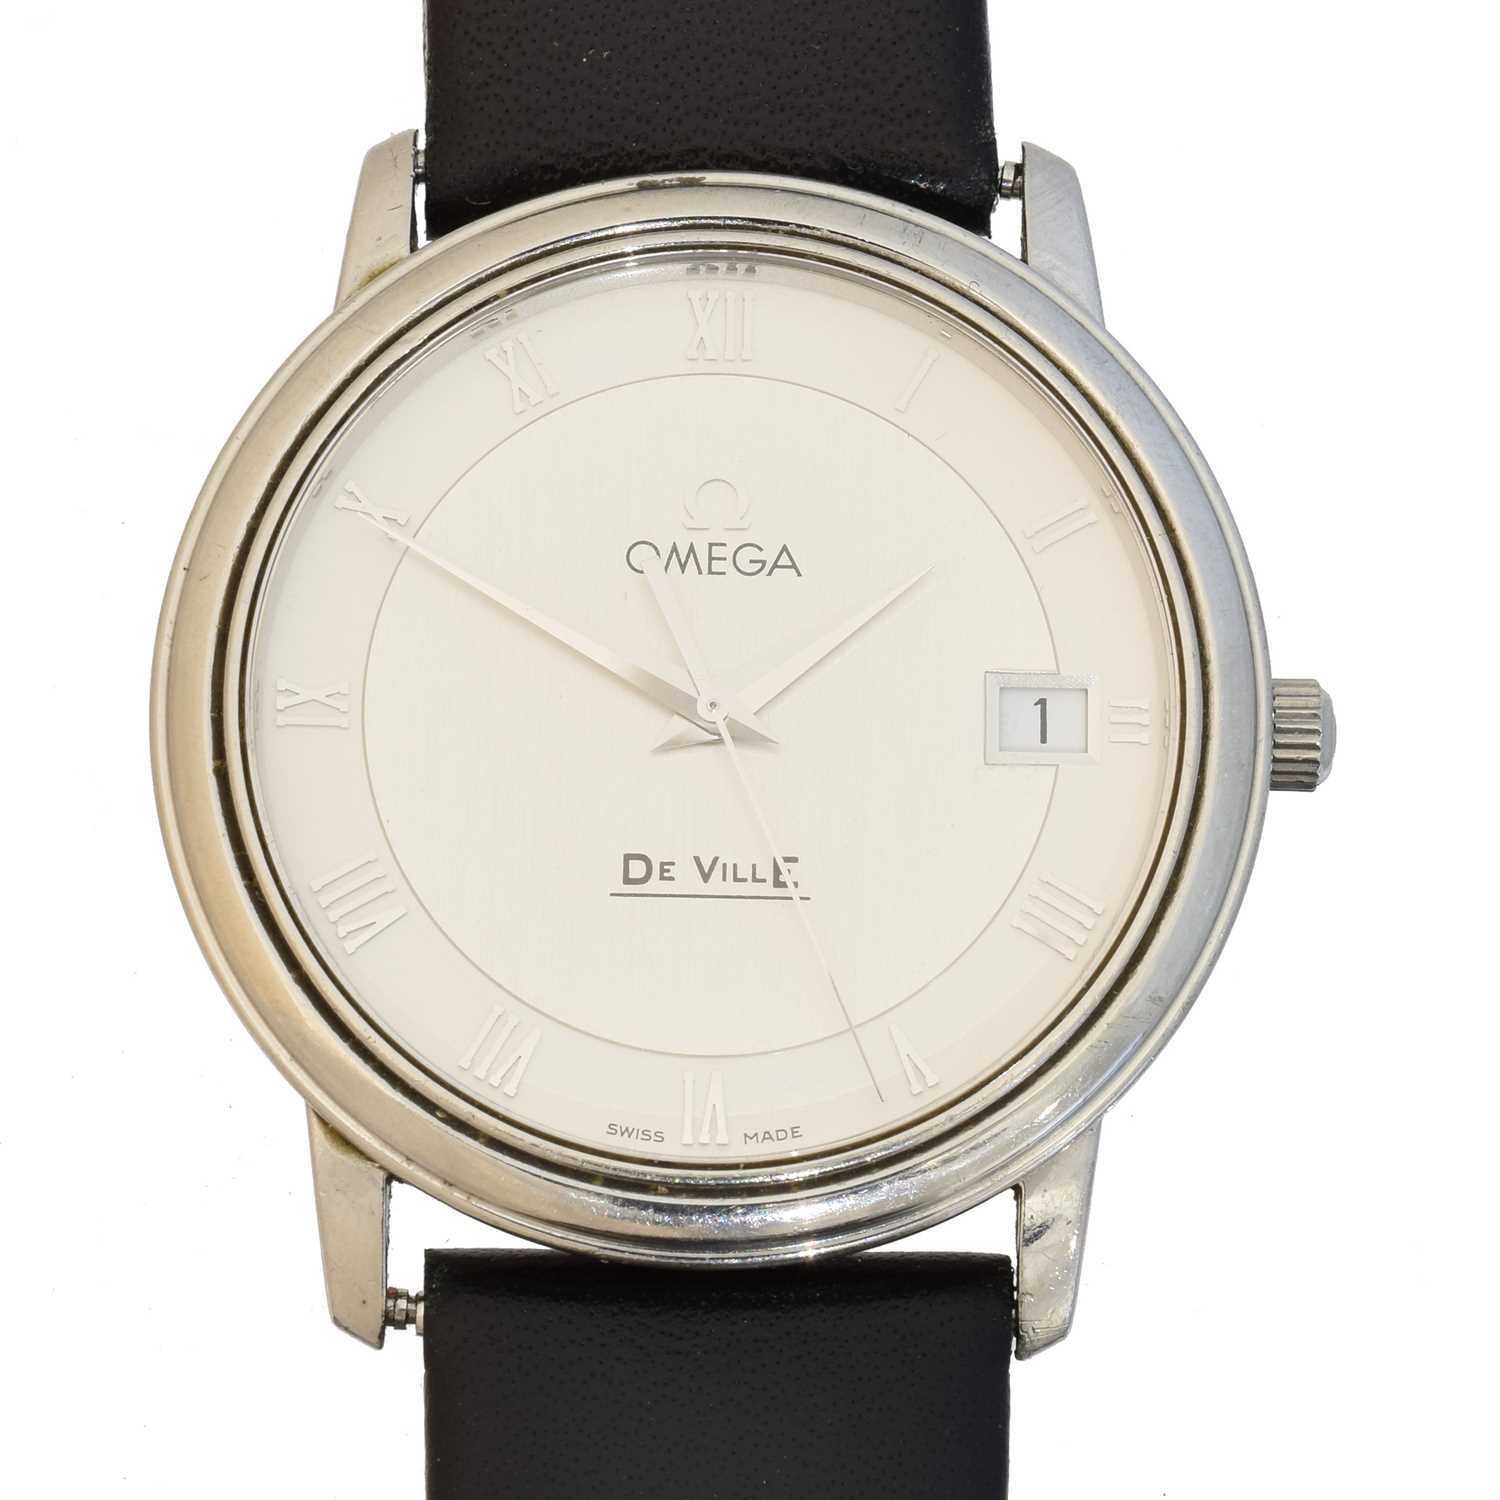 Lot An Omega De Ville quartz wristwatch